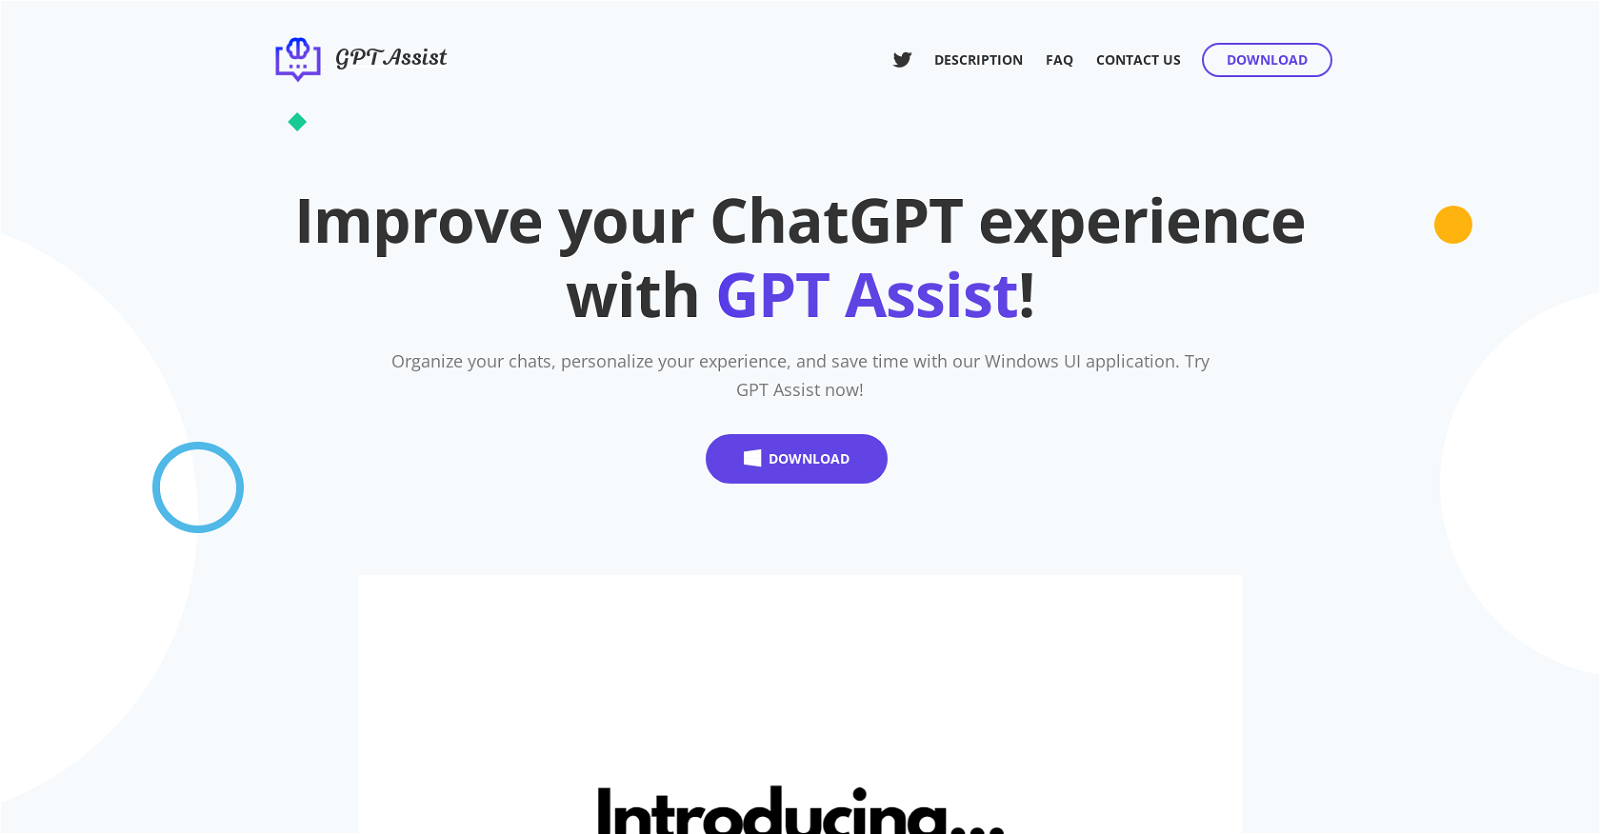 GPT Assist